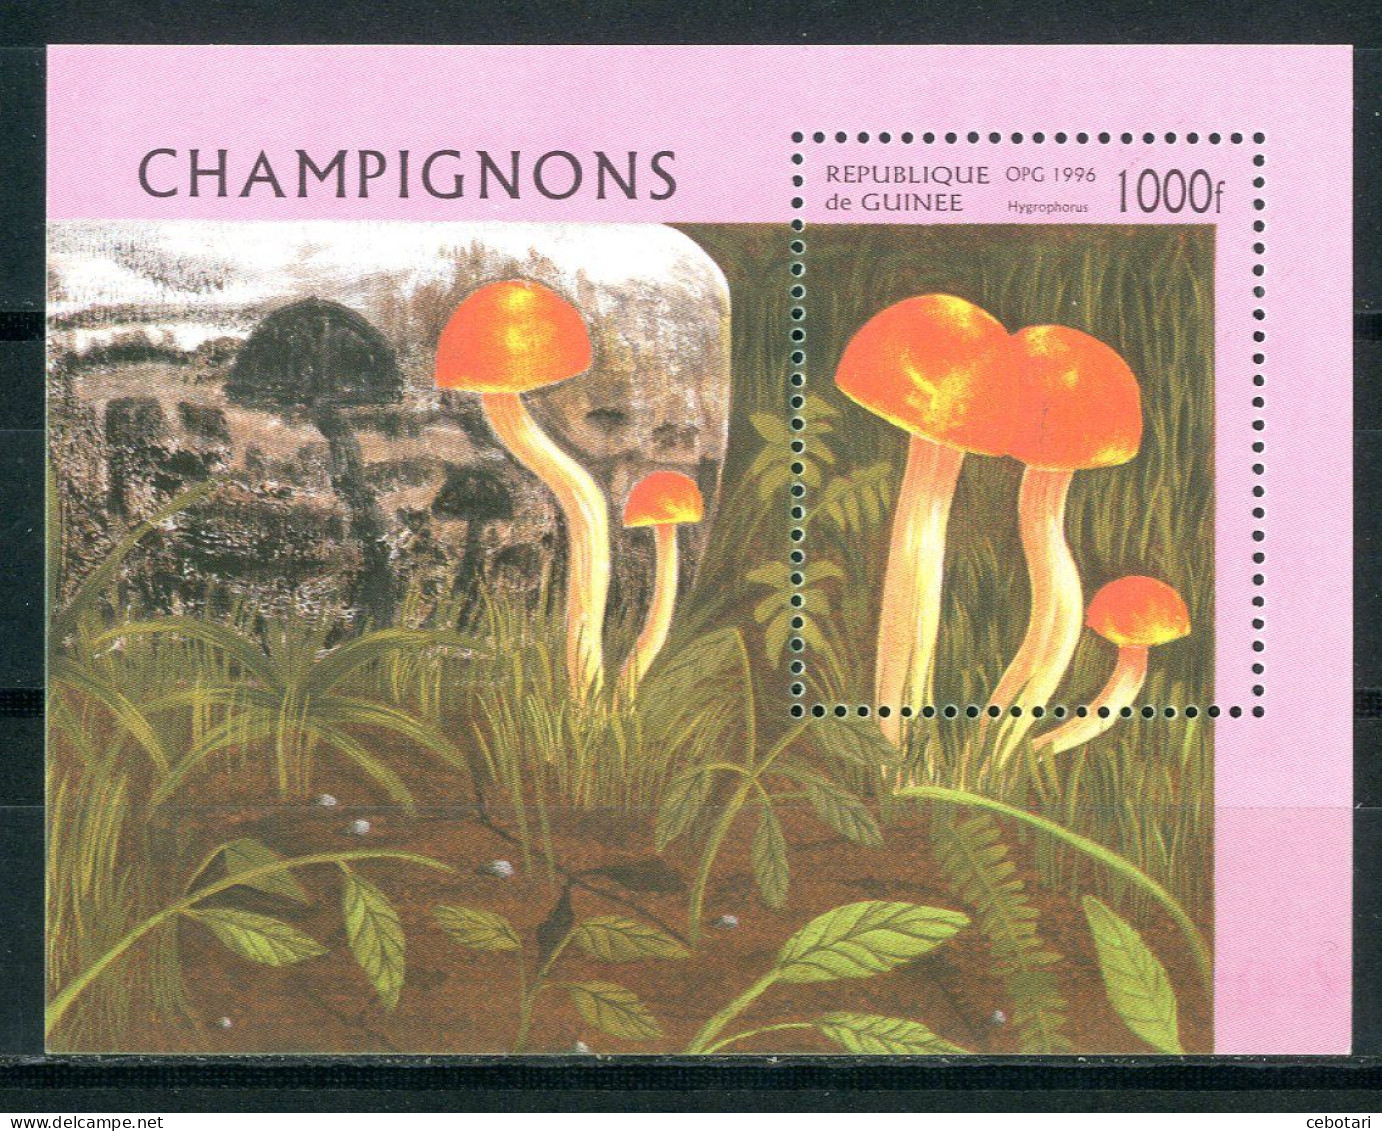 GUINEA / GUINEE 1996** - Funghi / Mushrooms - Miniblock. - Funghi